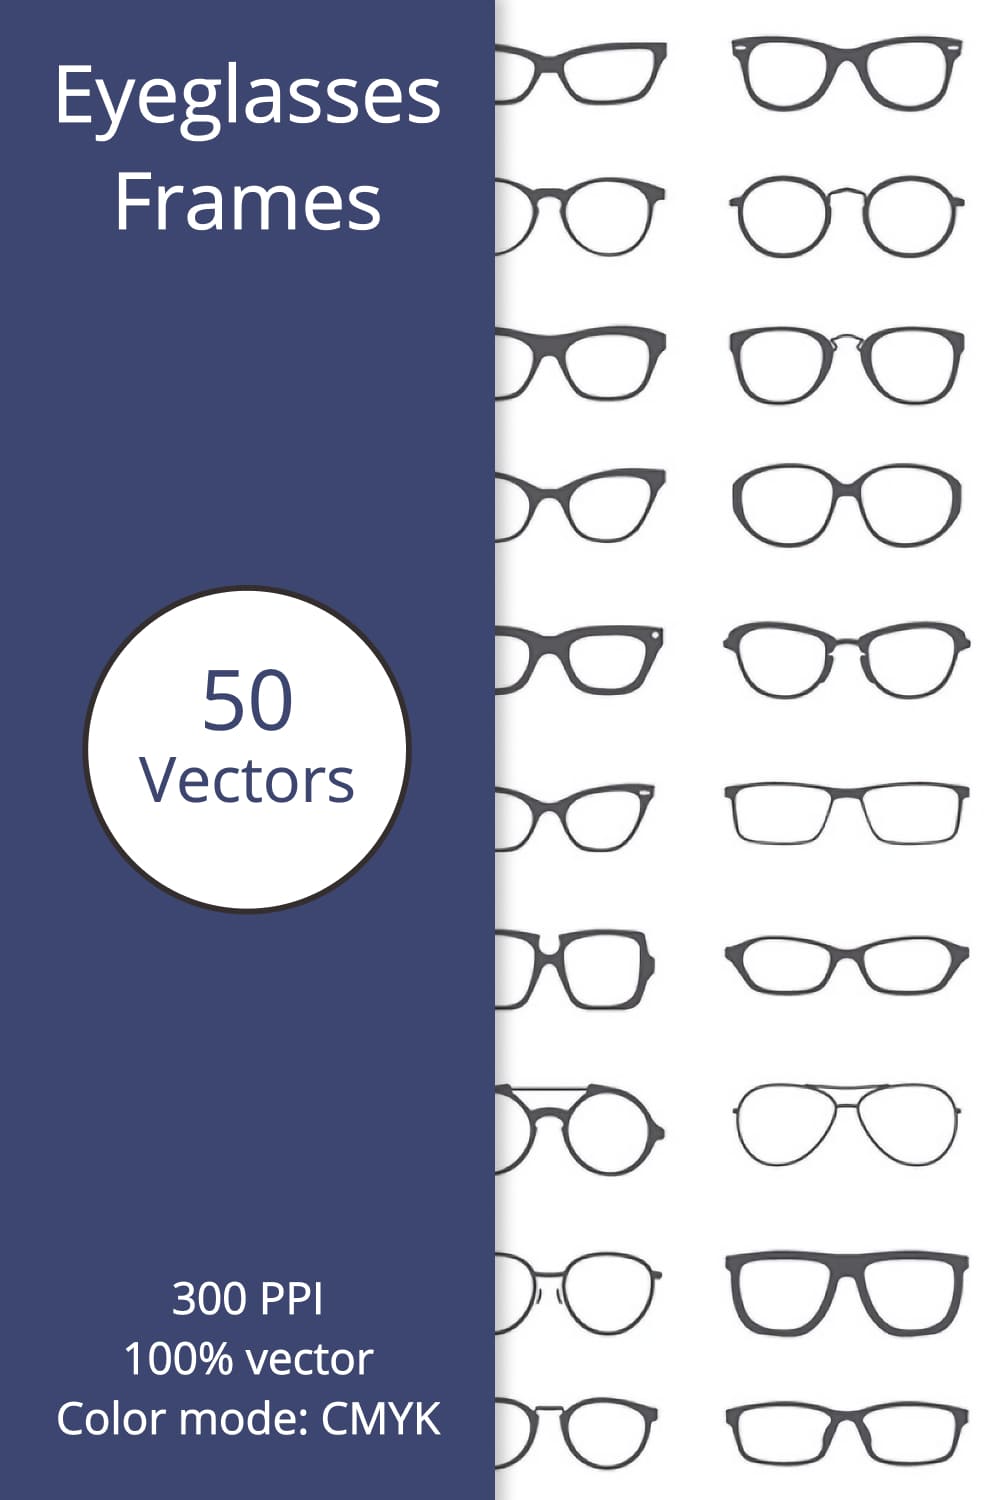 Eyeglasses frames 50 vectors pinterest image.